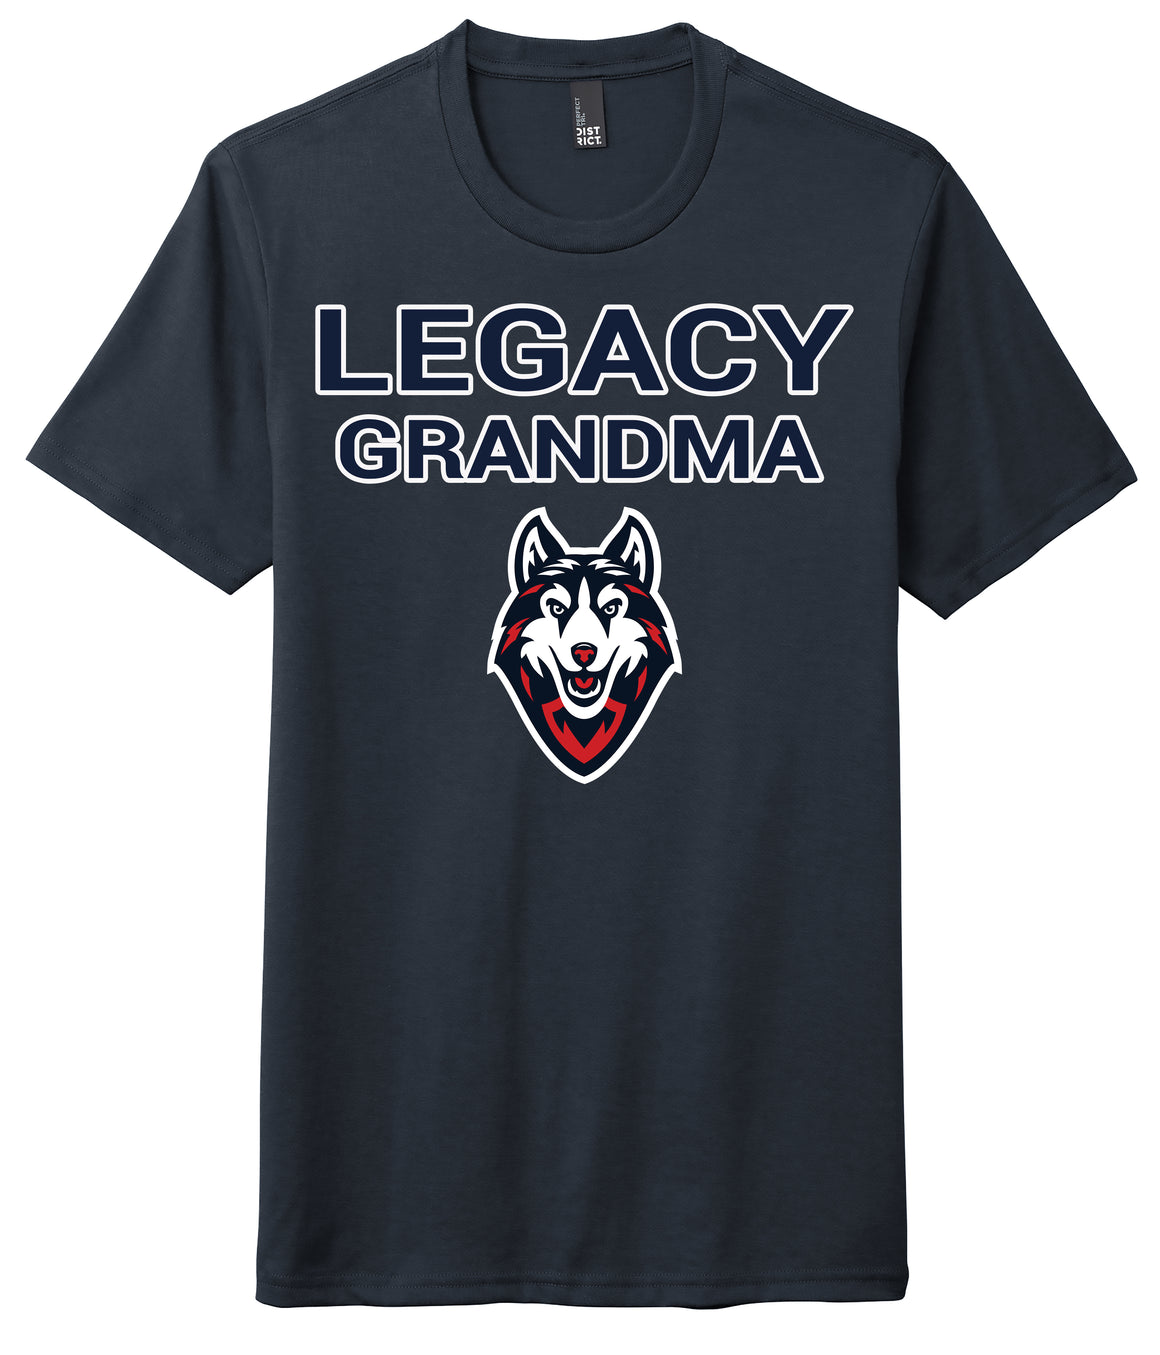 Legacy Traditional School Deer Valley - Grandma Shirt